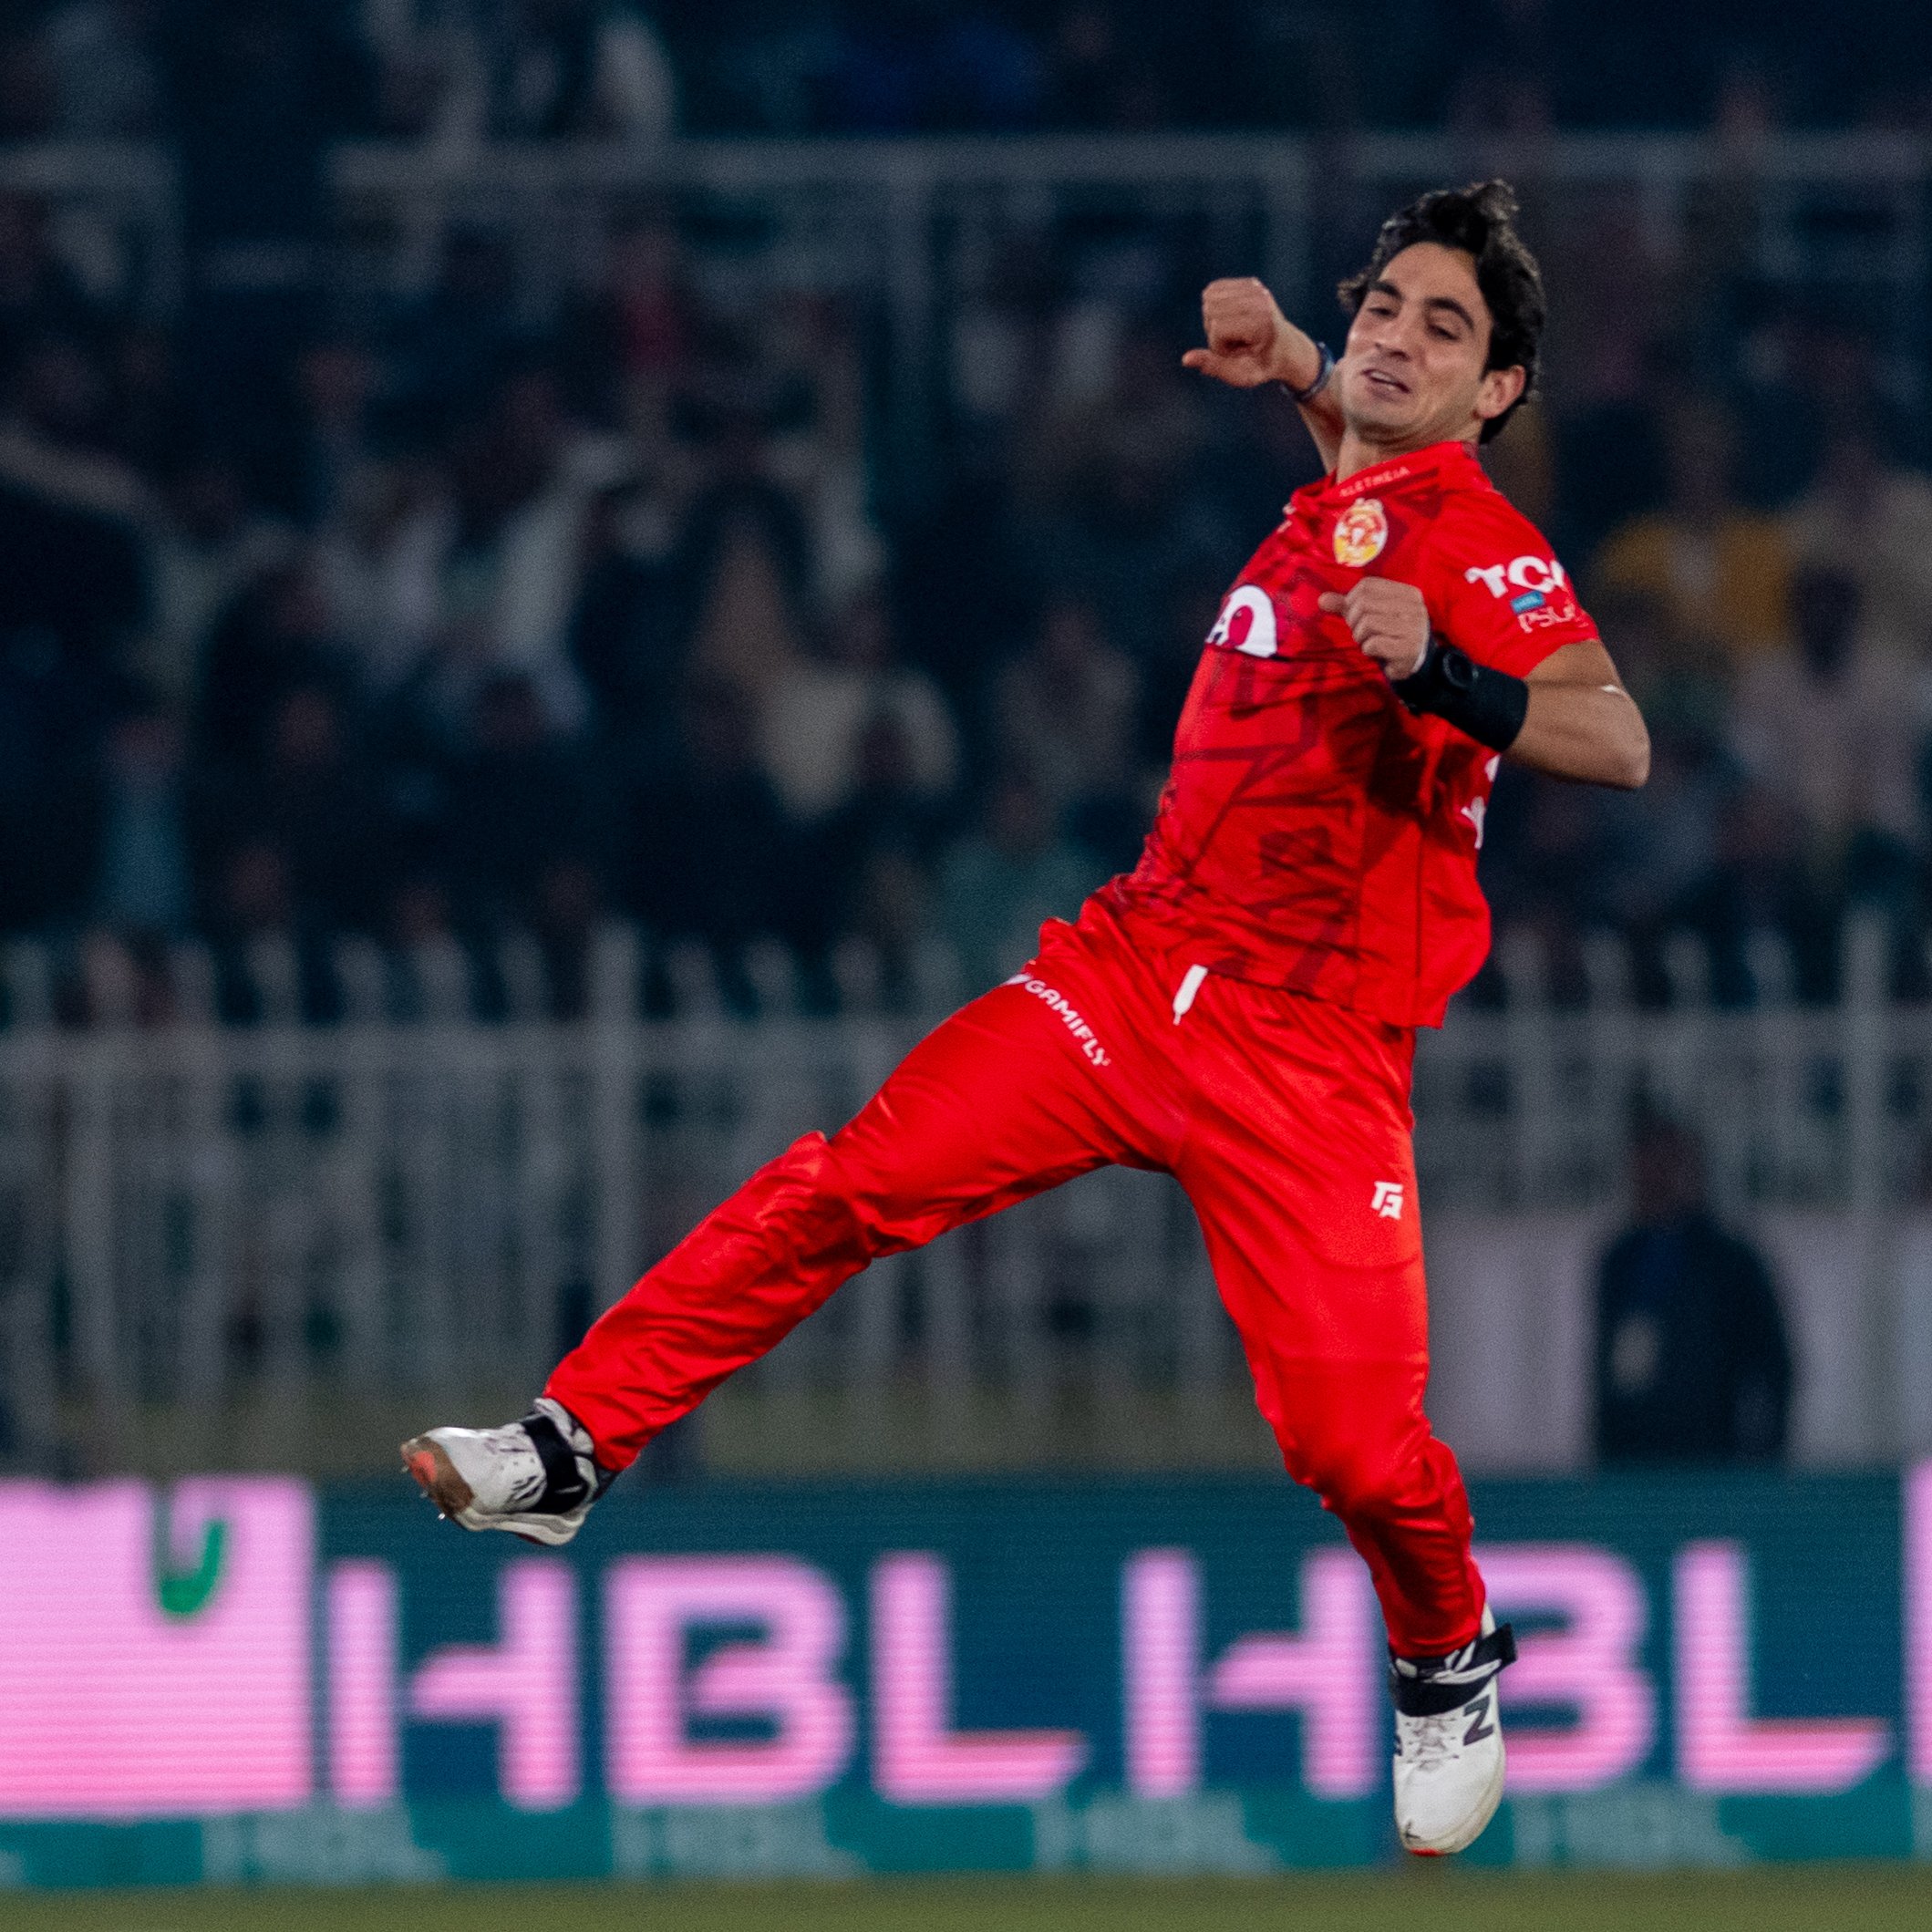 rising-stars-of-pakistan-cricket